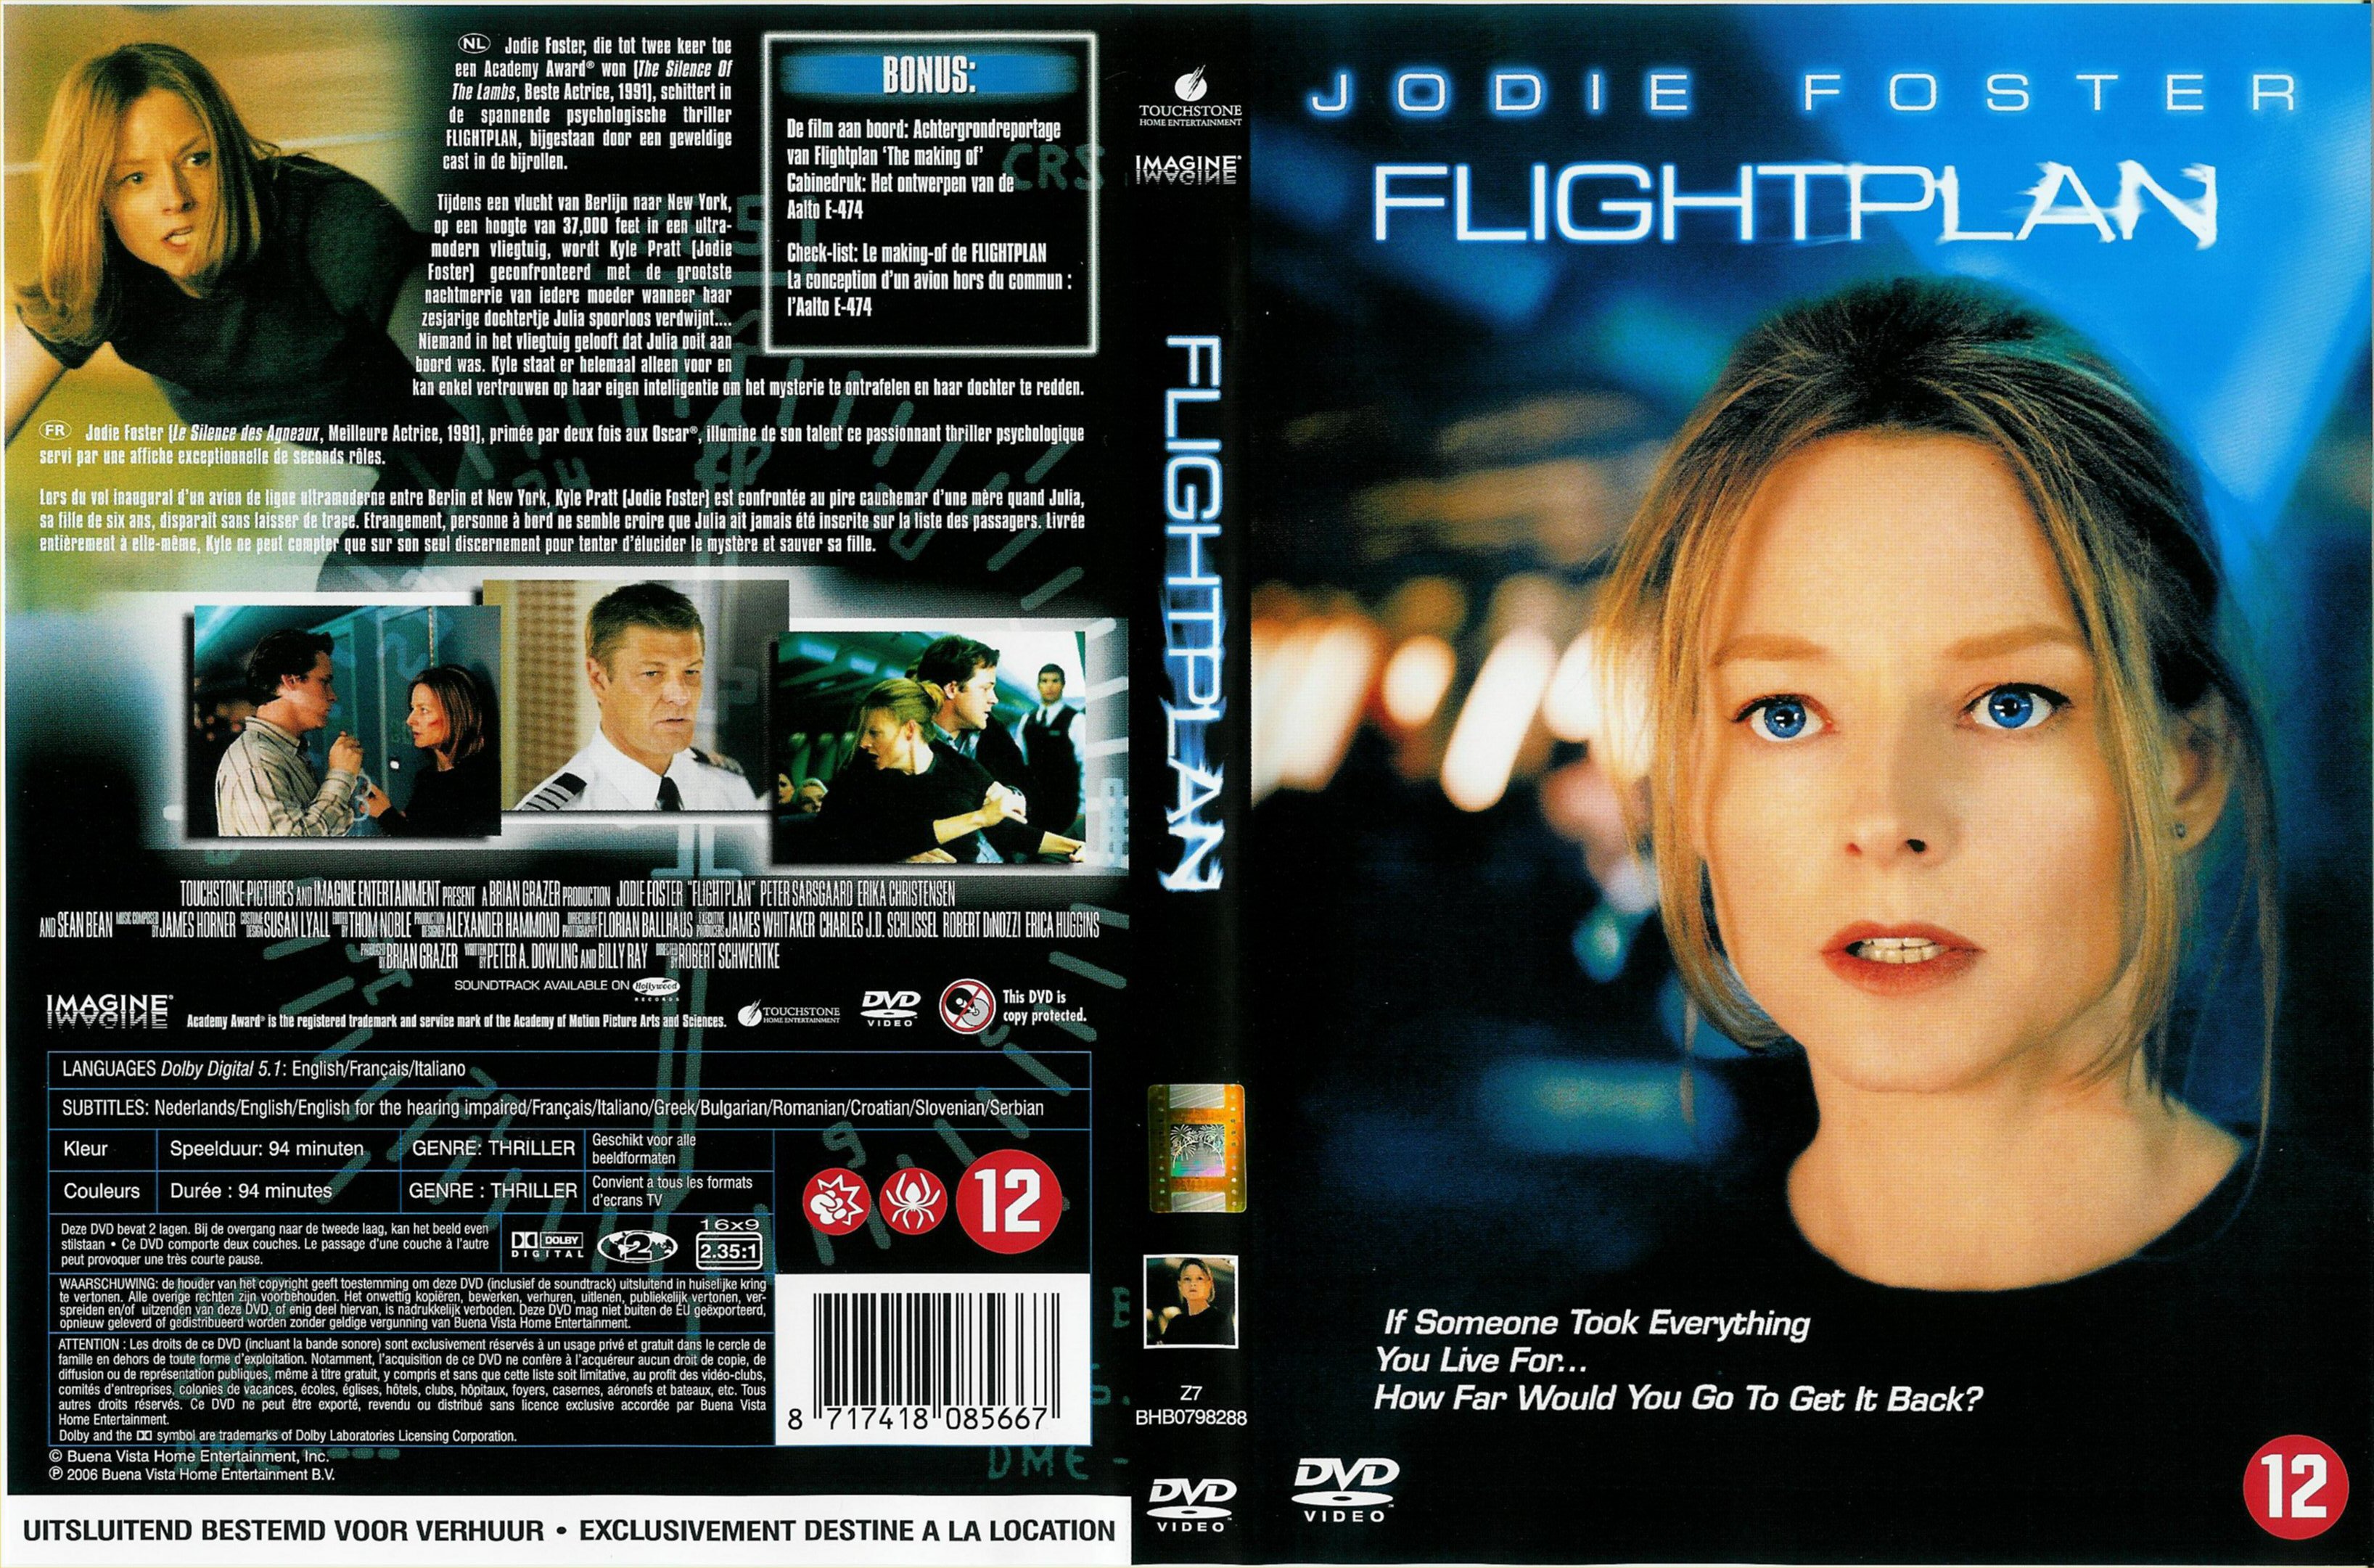 Jaquette DVD Flight Plan